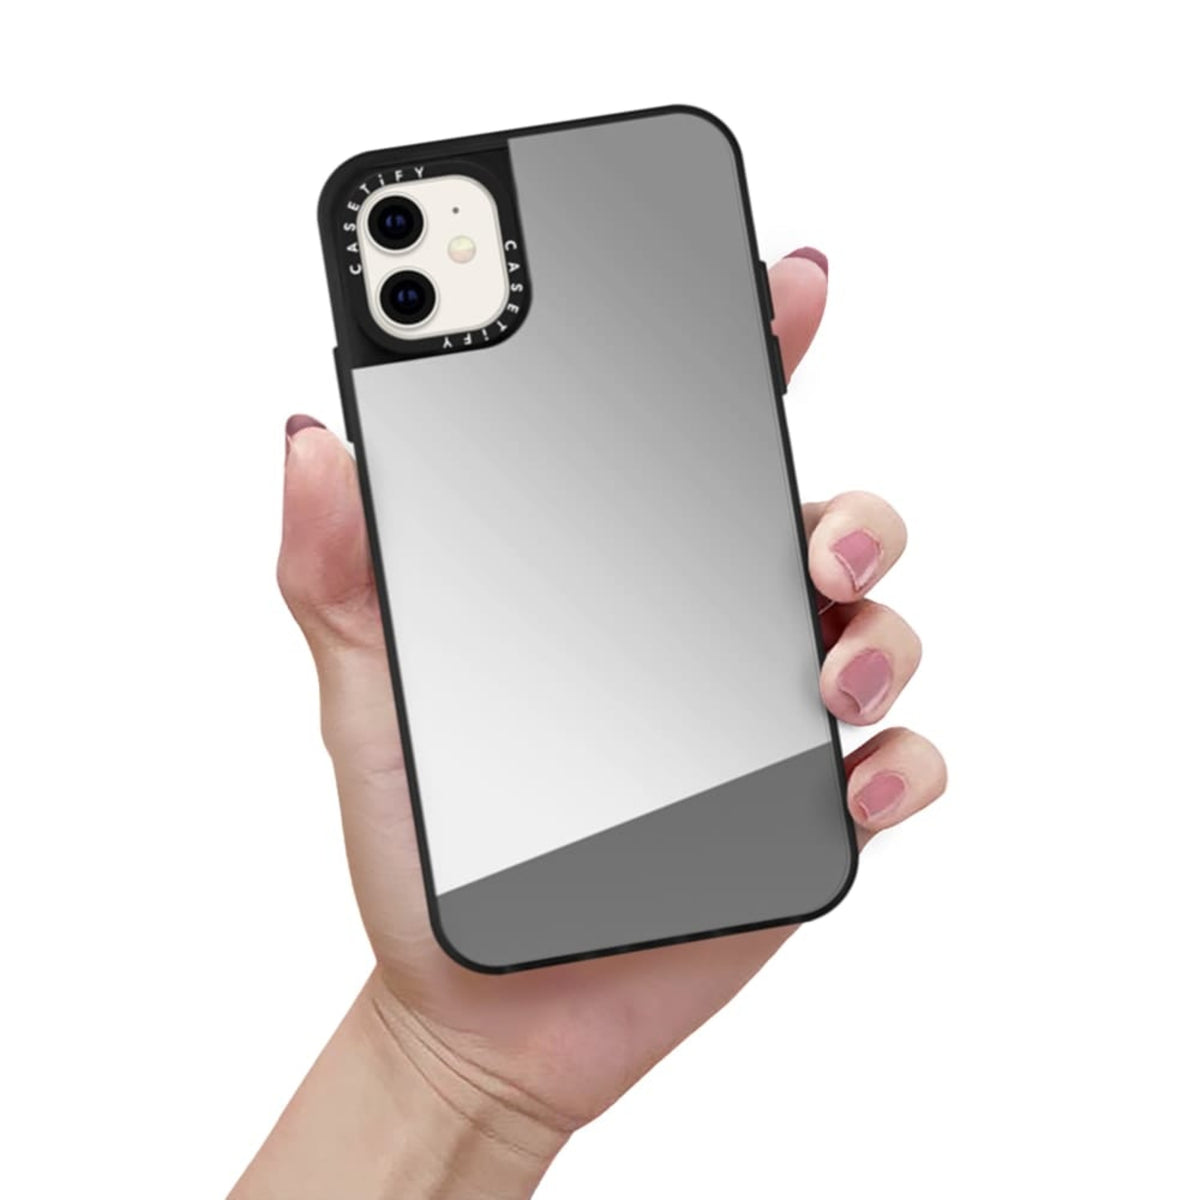 CASETIFY iPhone 12 Mini - Reflective Mirror Case - Silver